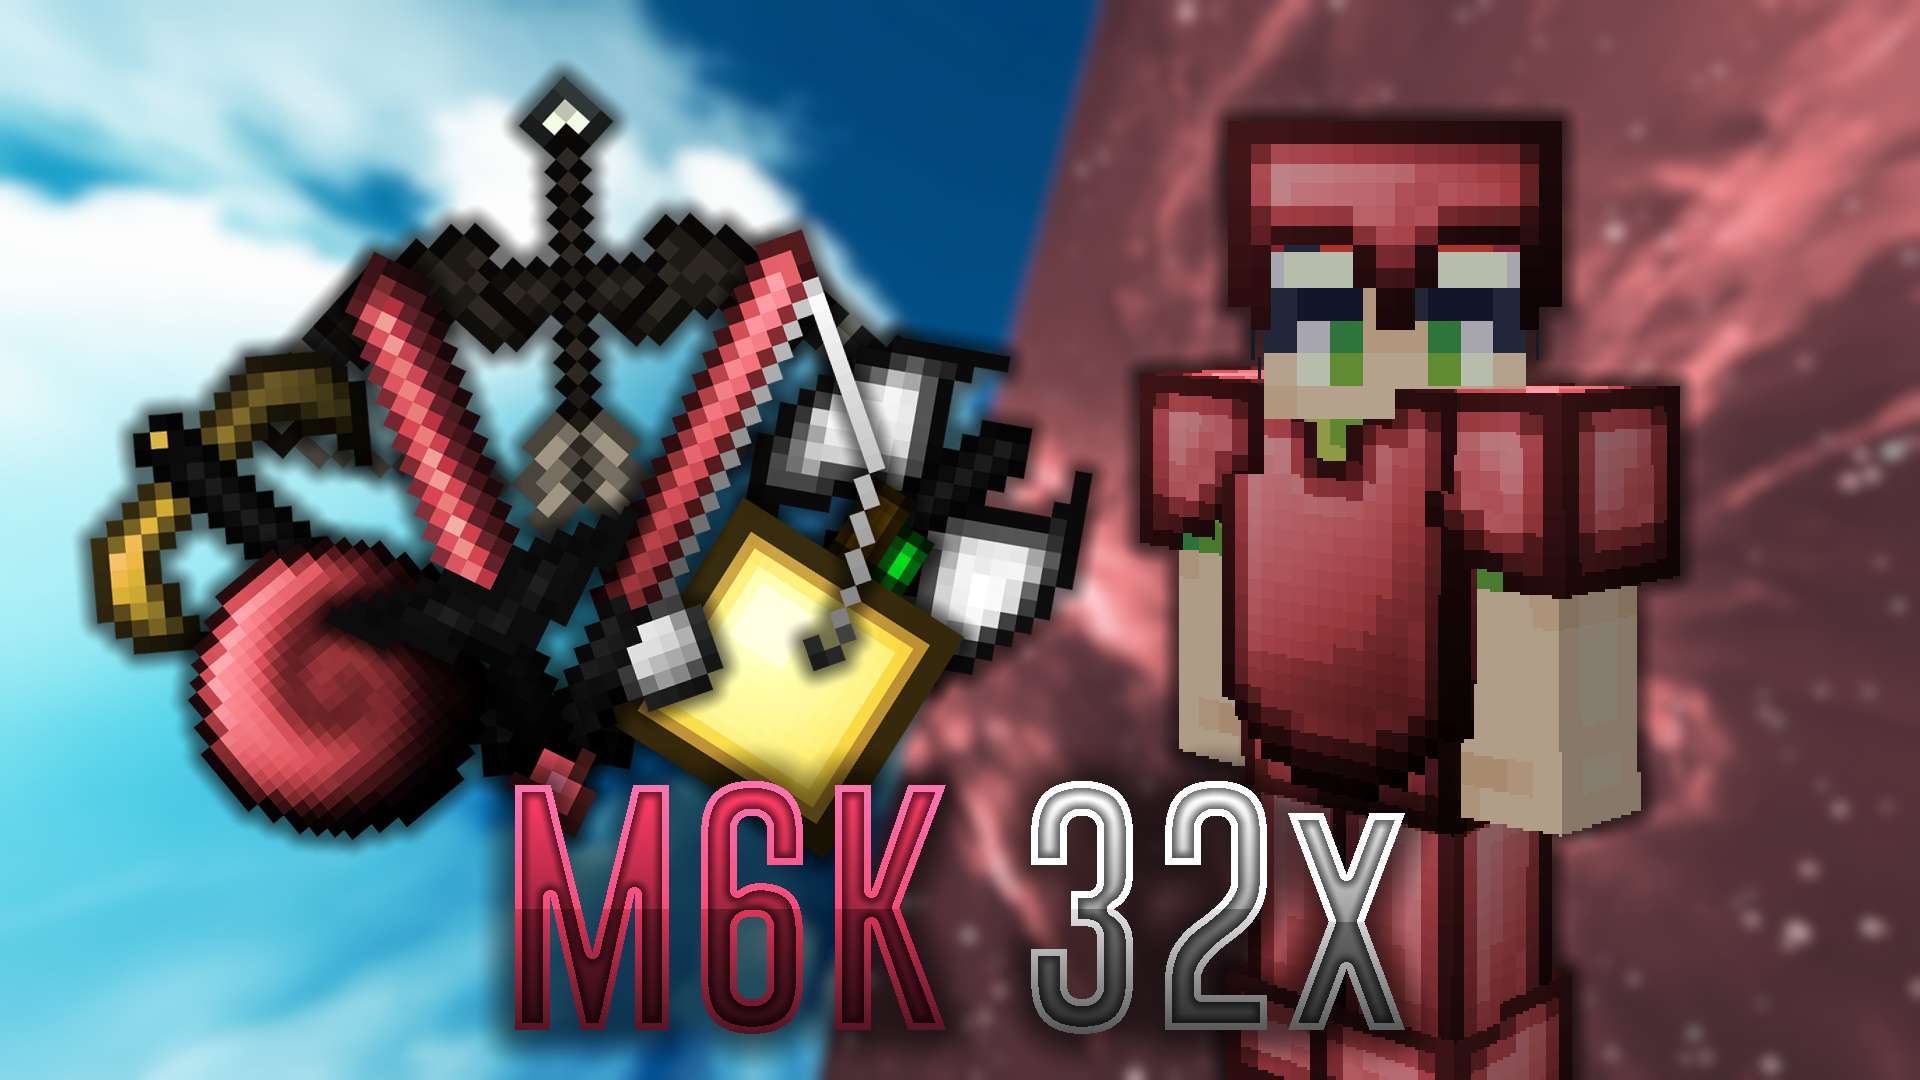 M6K 32x by Mek & se6n on PvPRP